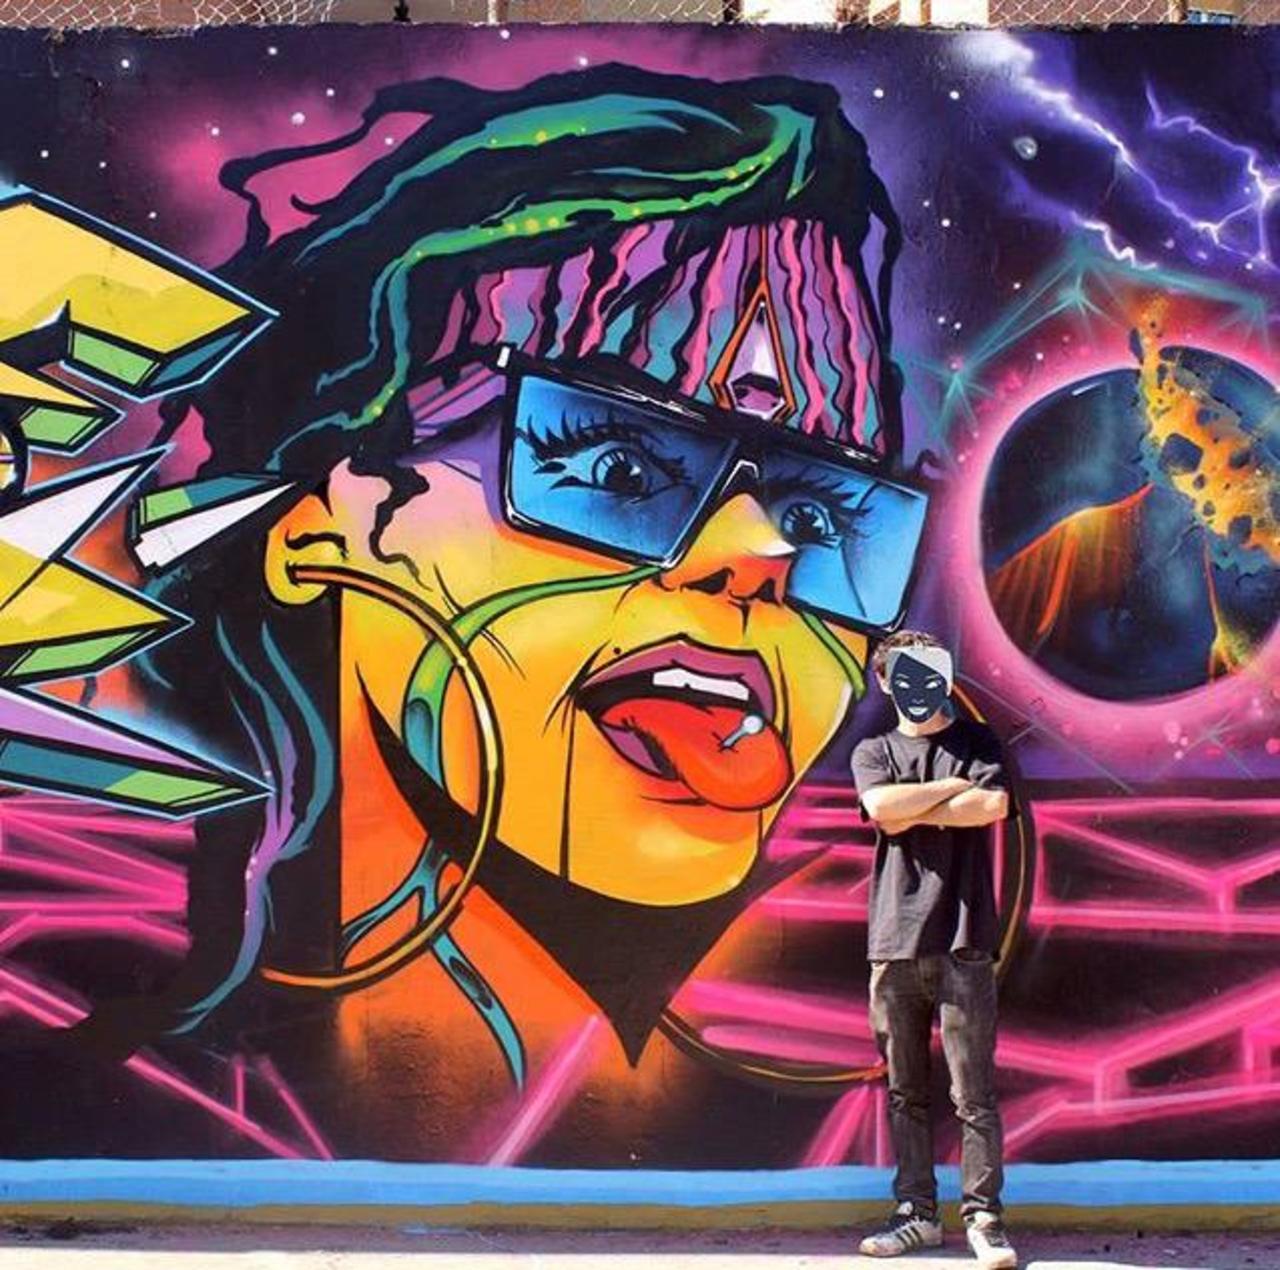 Brilliant new Street Art by the artist Jaycaes

#art #graffiti #mural #streetart http://t.co/x9iZzrPPhk